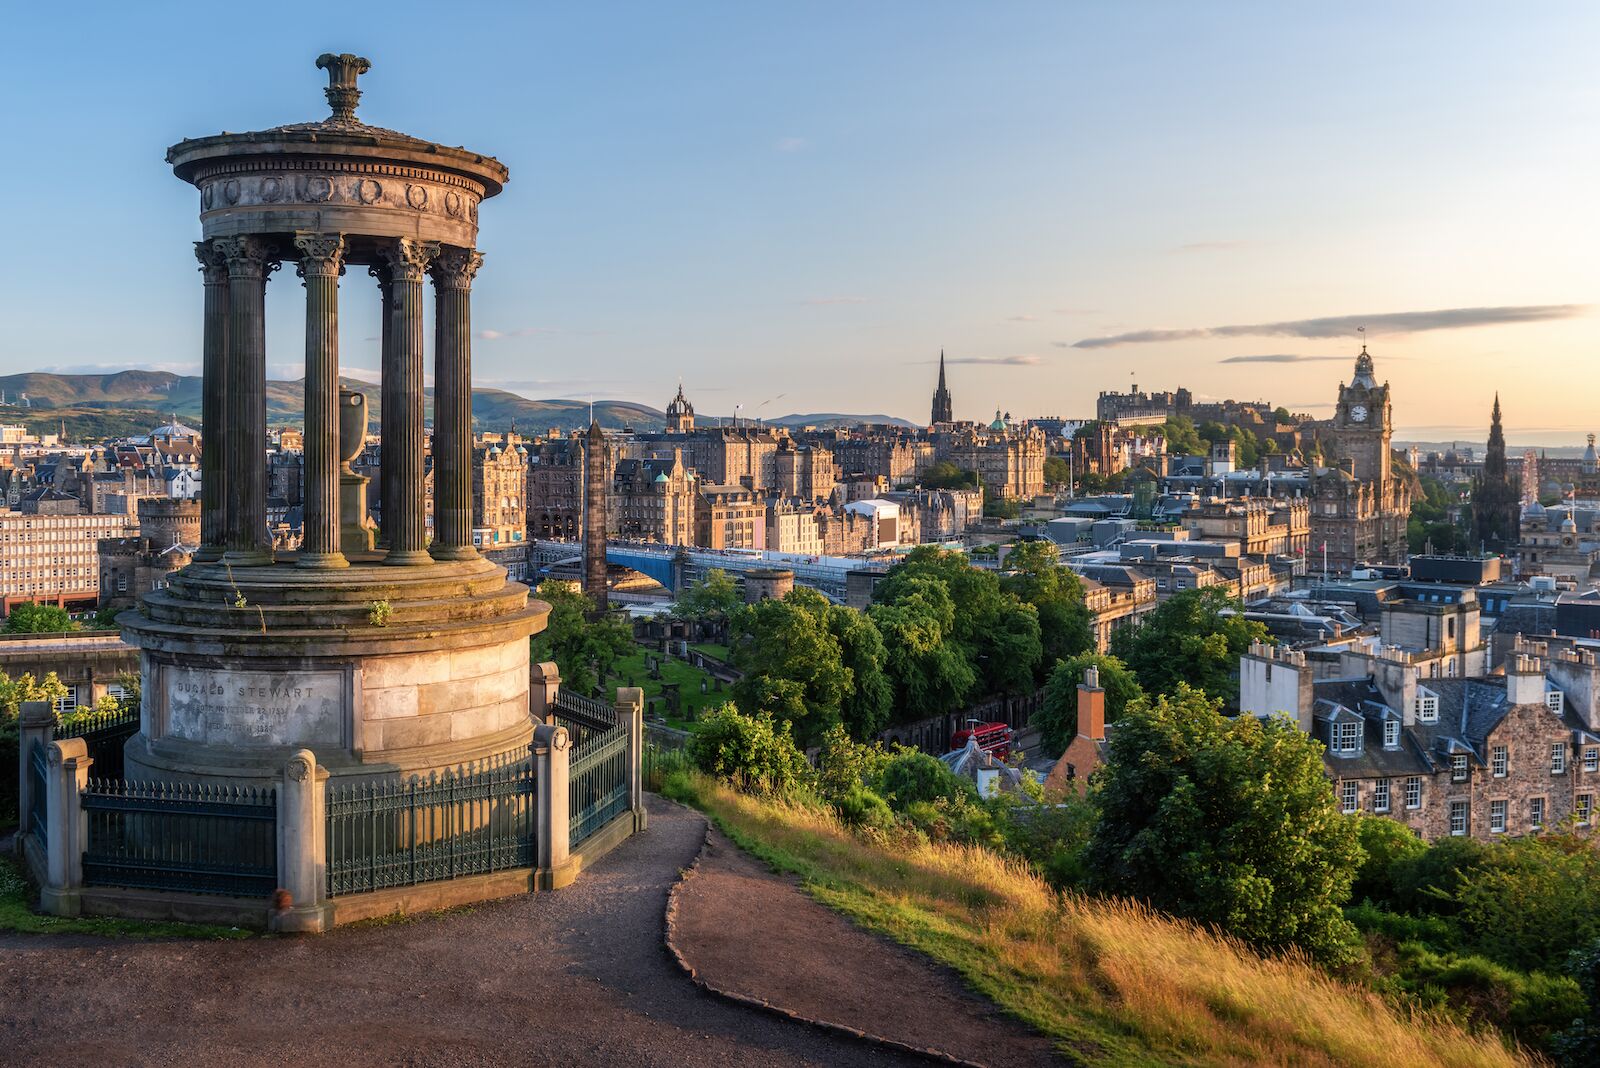 The Dugald Stewart Monument in Edinburgh